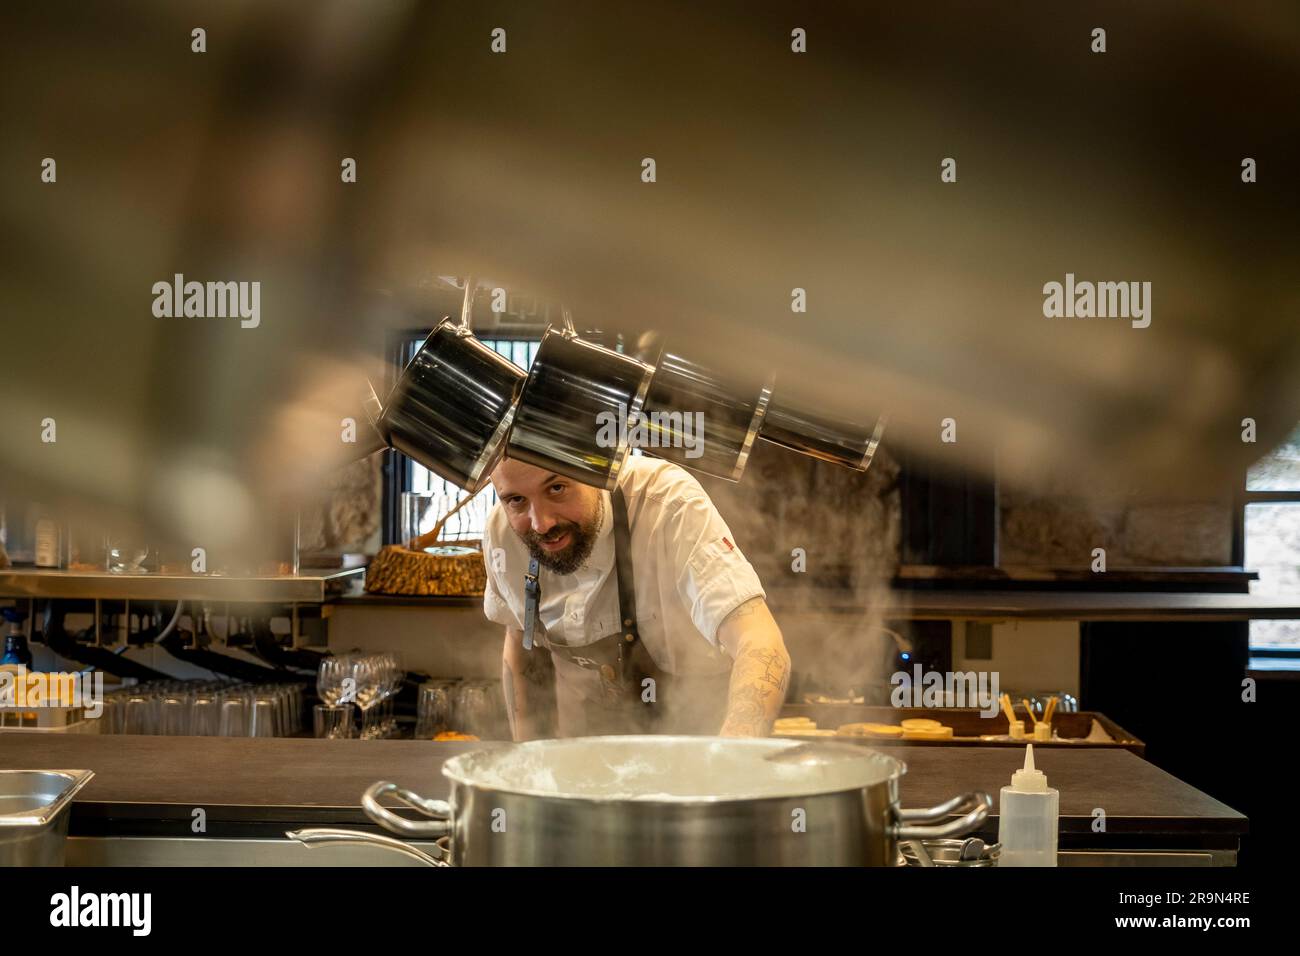 Edorta Lamo, Arre Restaurant Chef, subida al Fronton 46, Kanpezu, Baskenland, Spanien Stockfoto